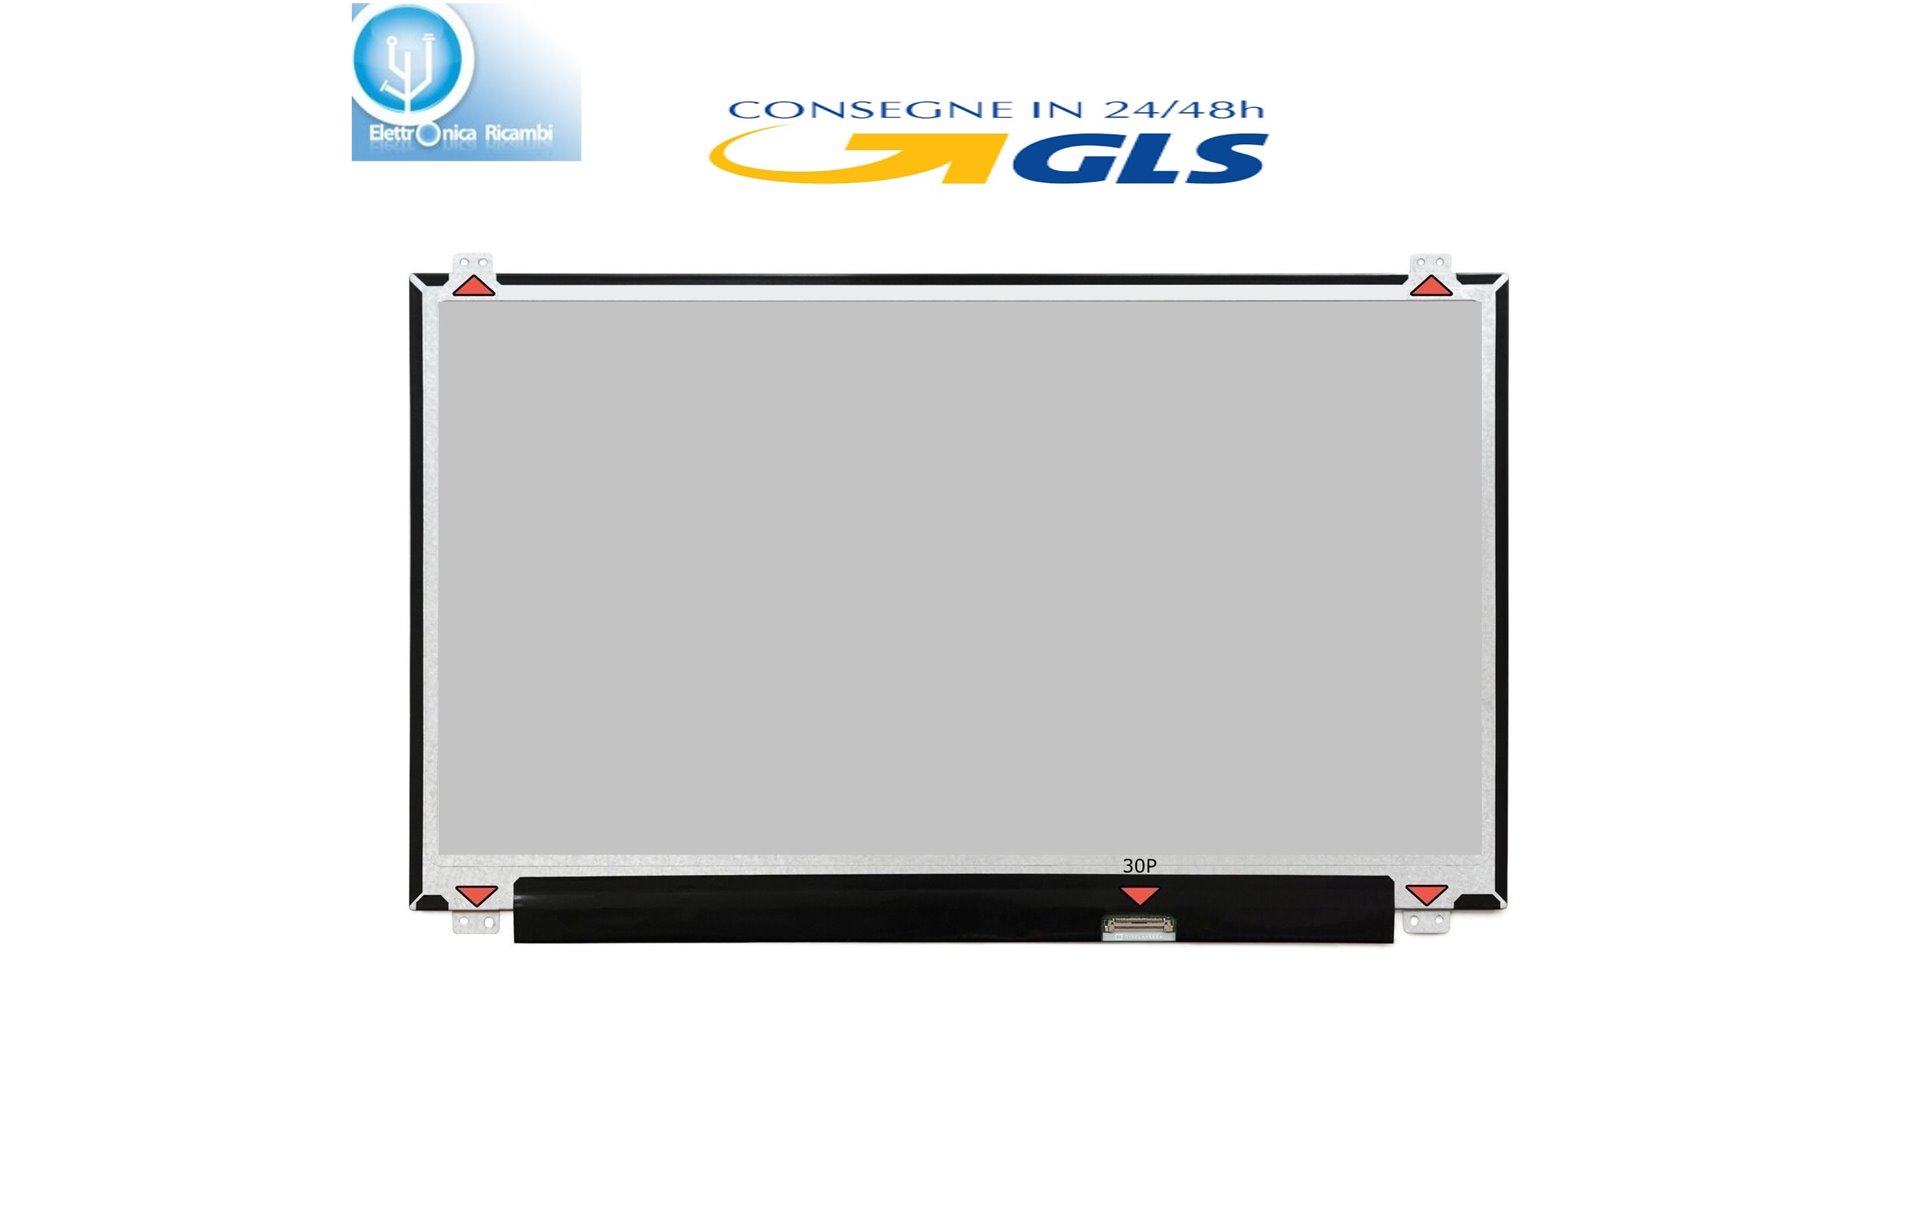 DISPLAY LCD HP W0X61EA 15.6 WideScreen (13.6"x7.6") LED"